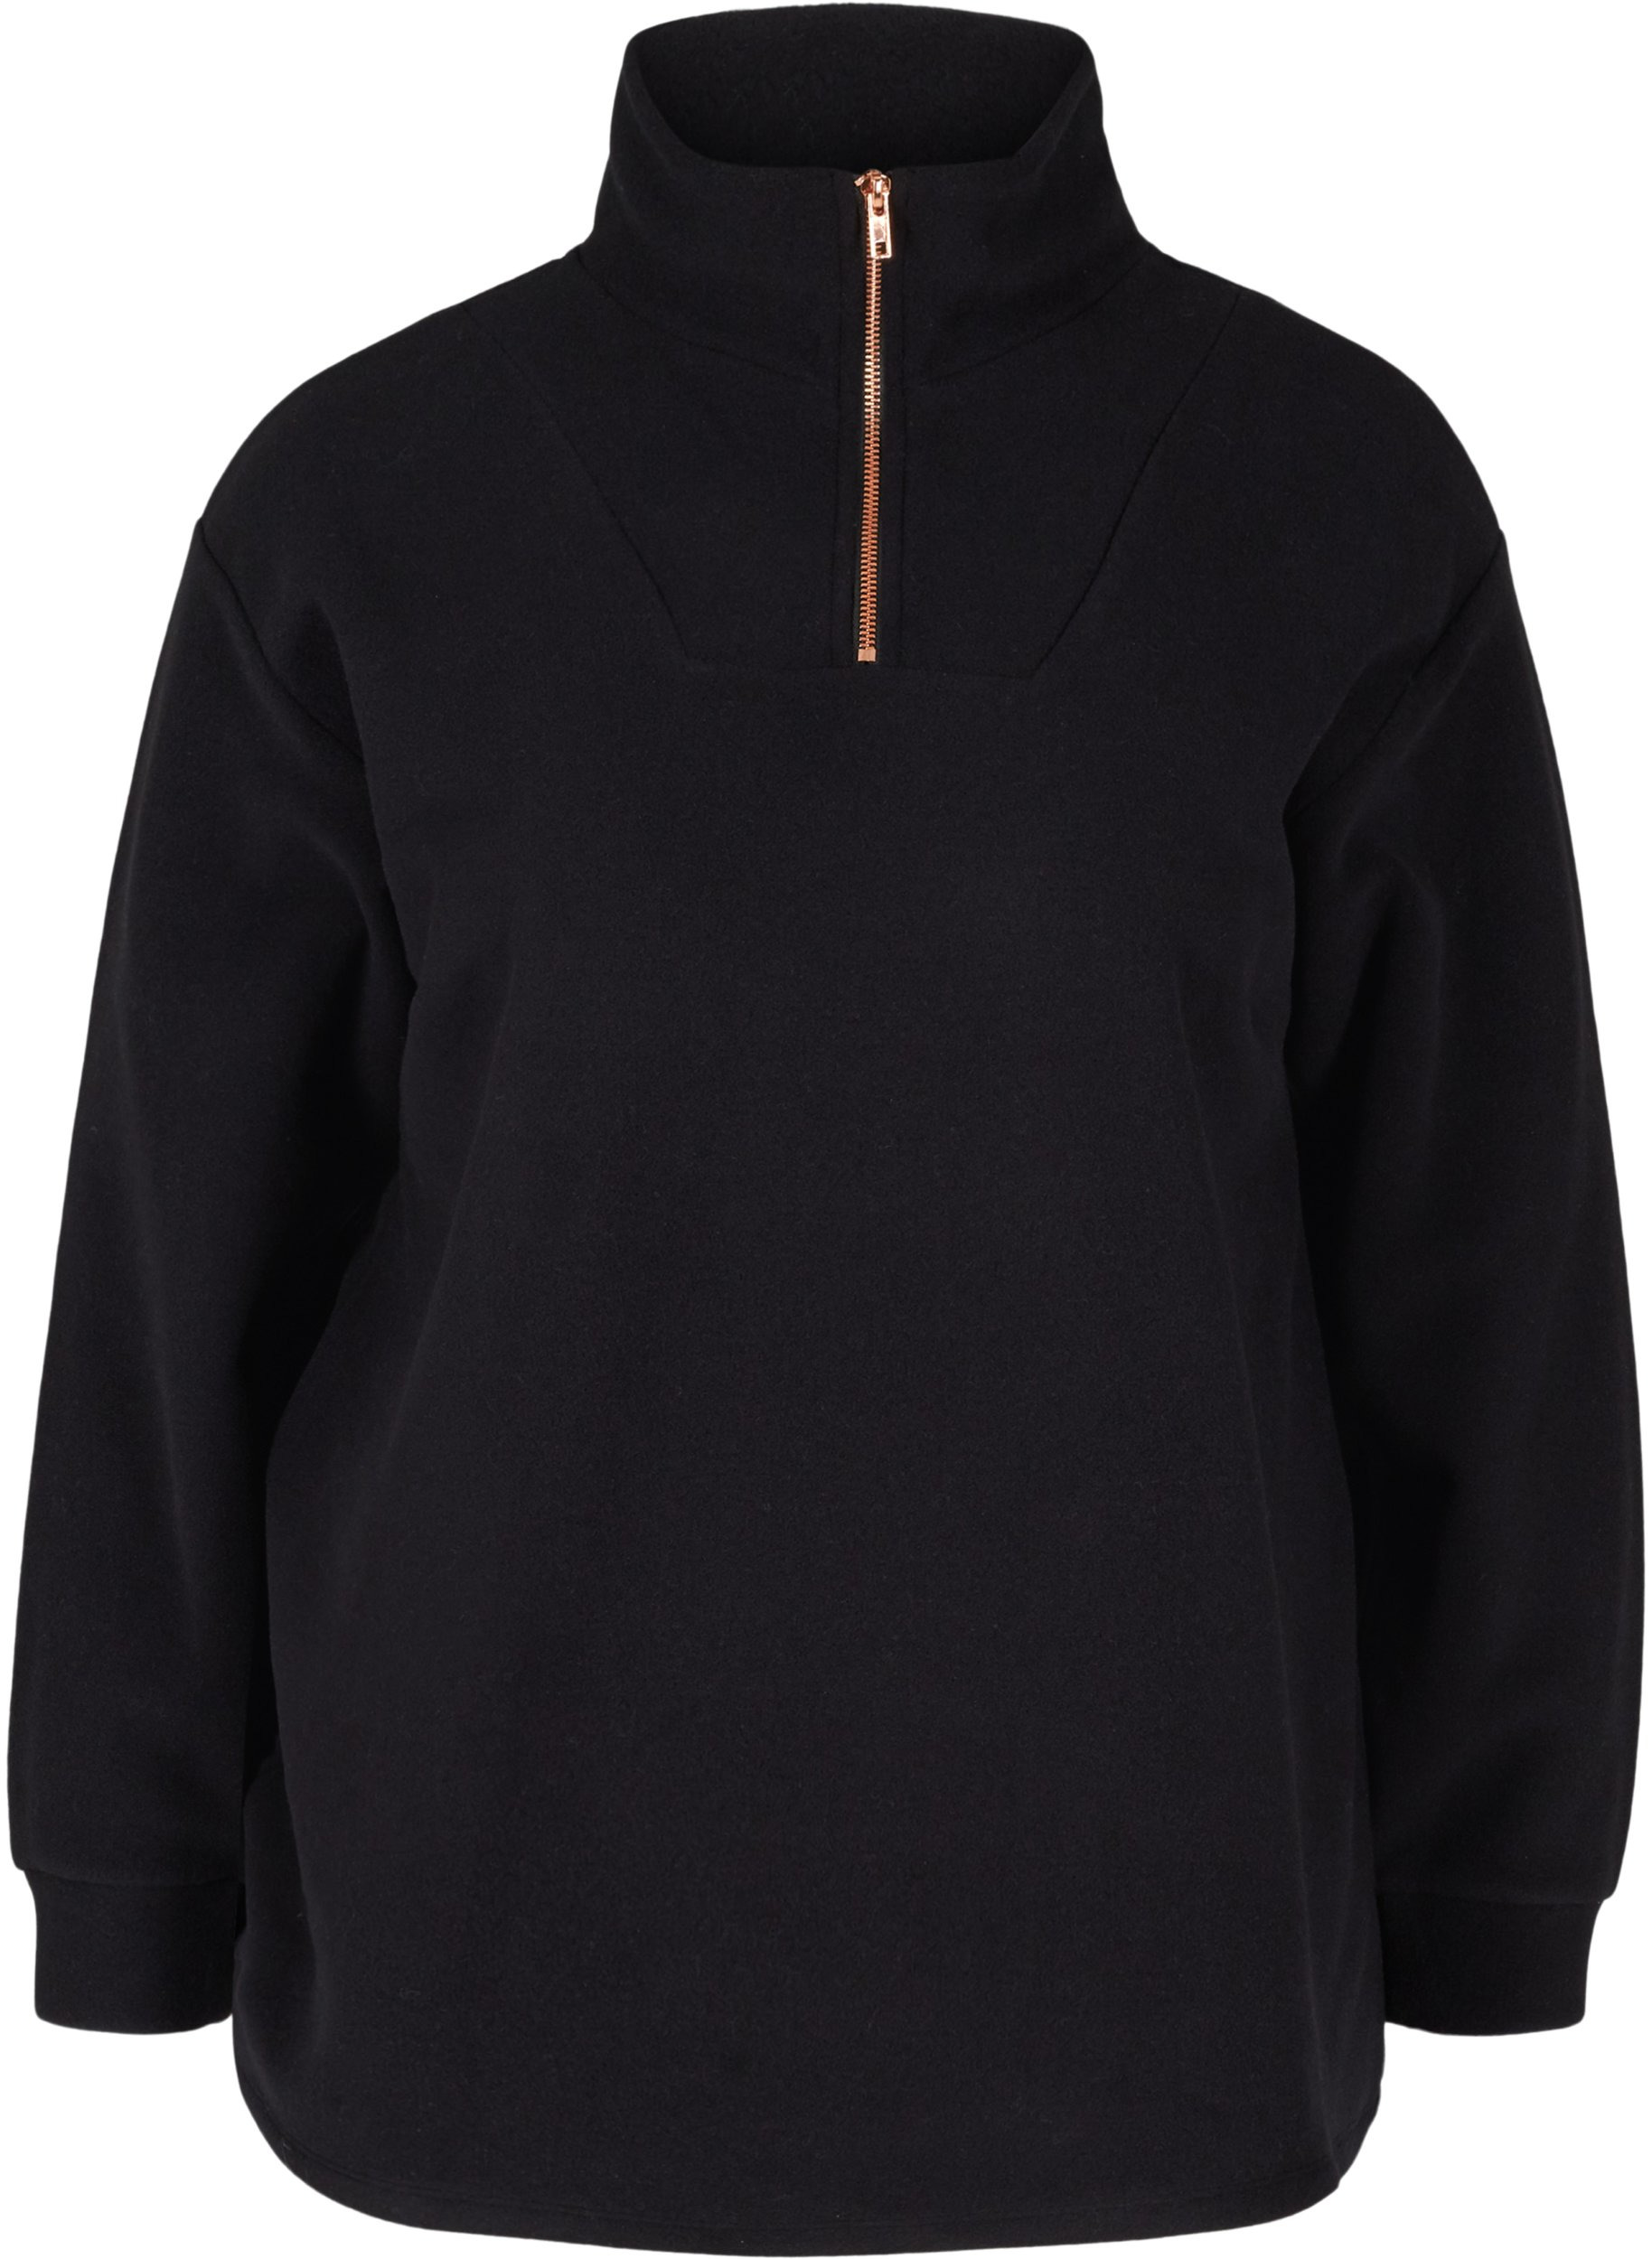 Hochgeschlossenes Fleece-Sweatshirt mit Reißverschluss, Black